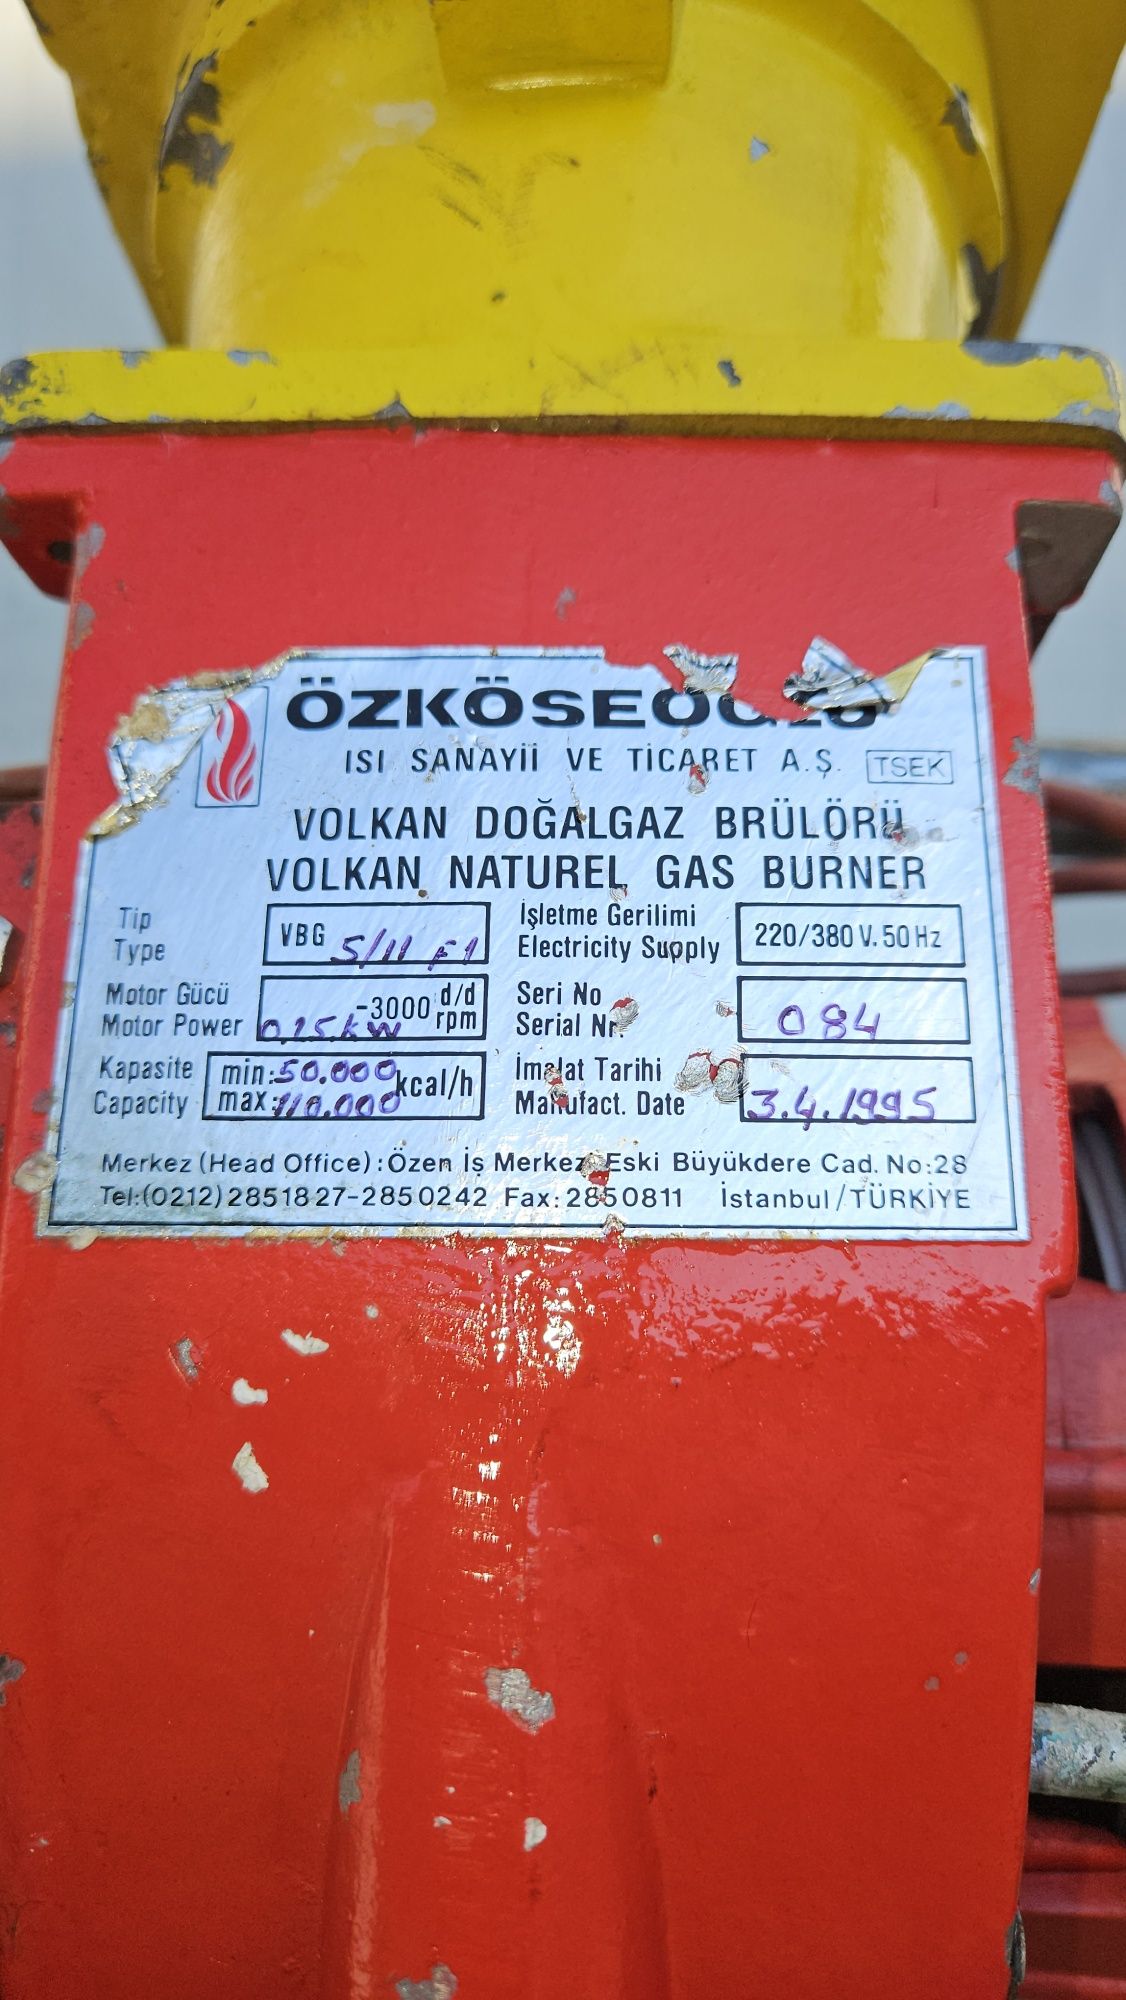 Arzător industrial ÖZKÖSEOLOĞU Volkan Turcia